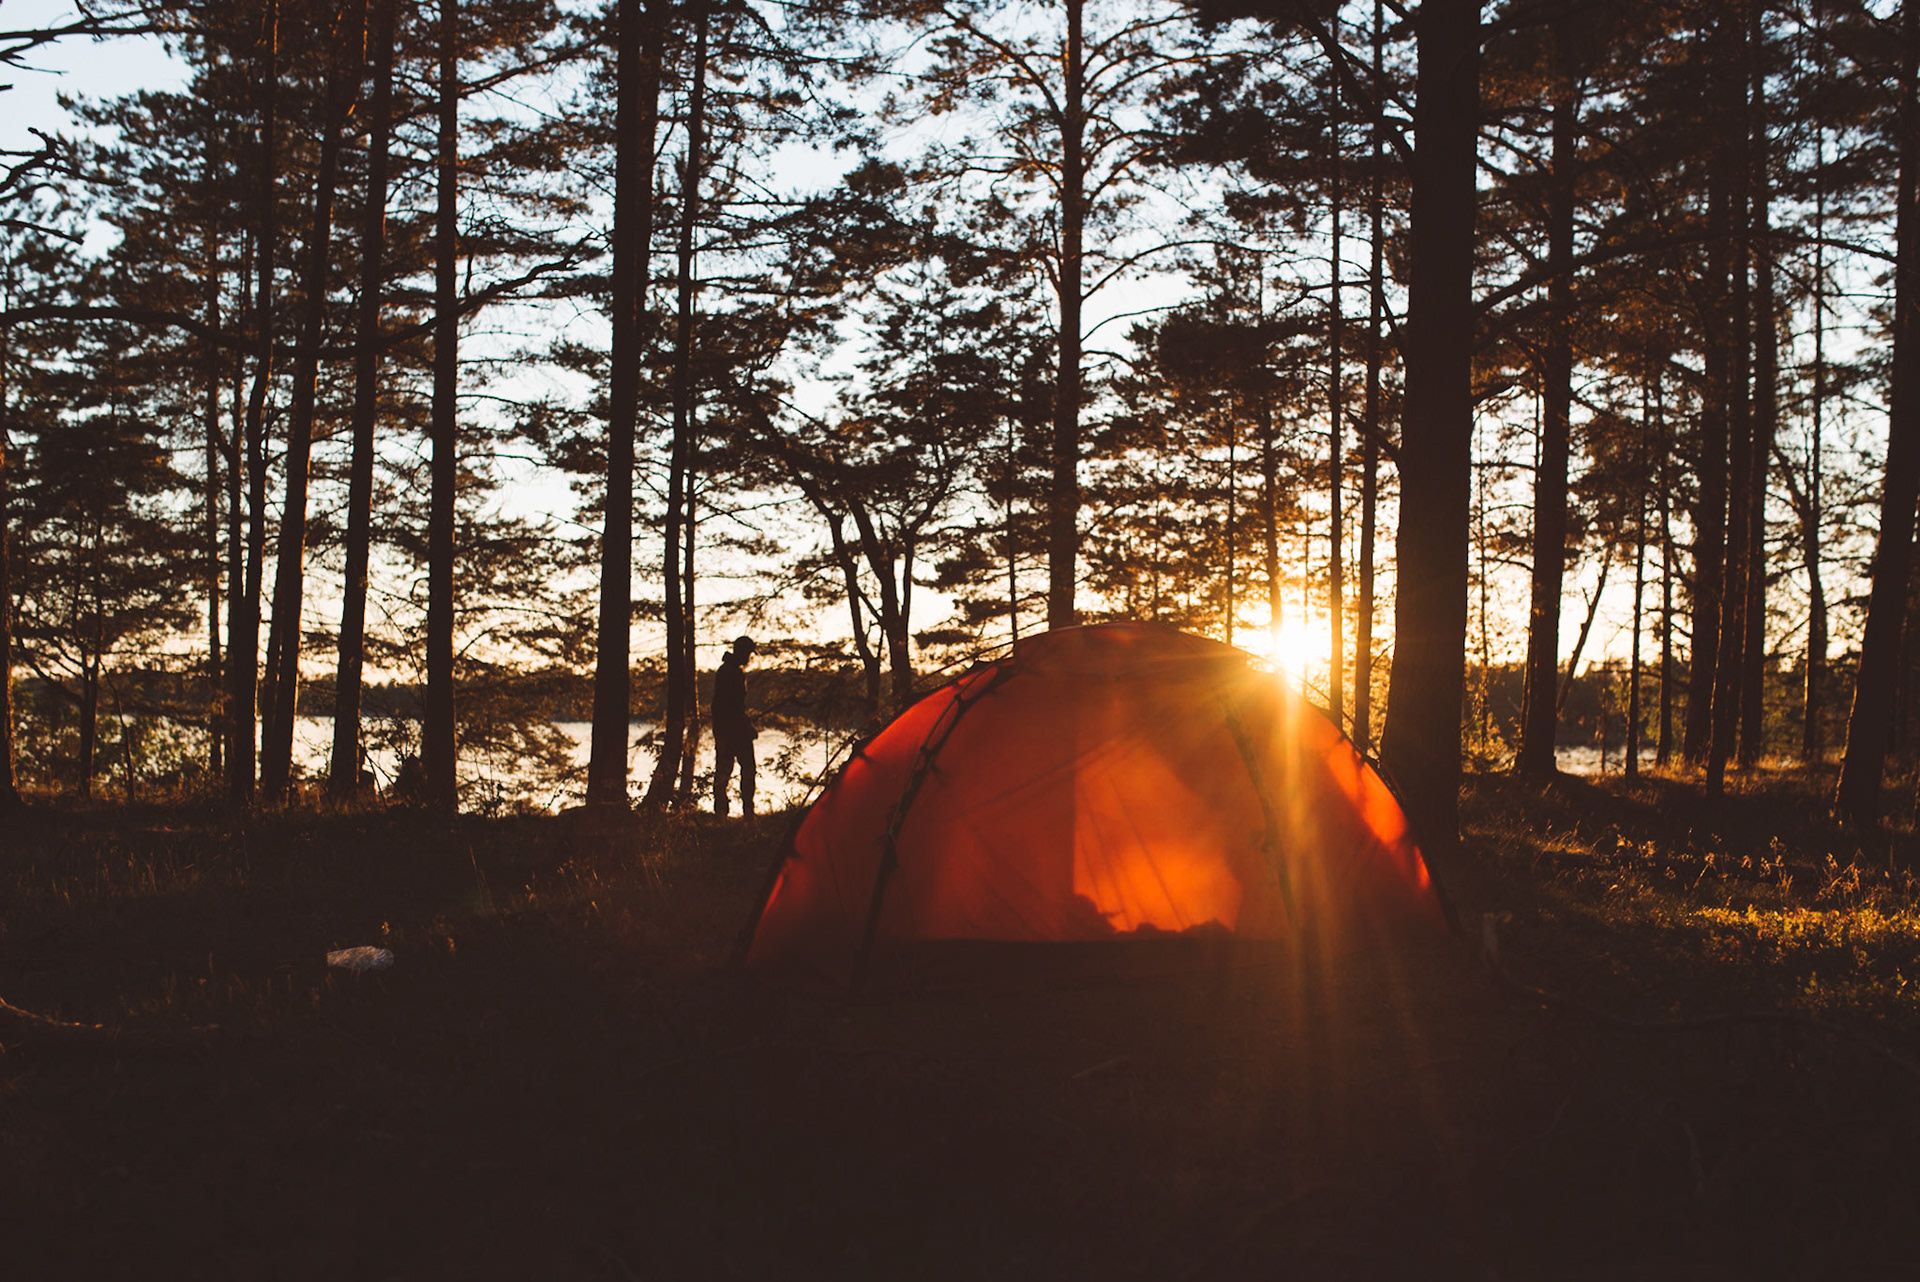 A wild campsite on the Saint Anna Archipelago, Sweden